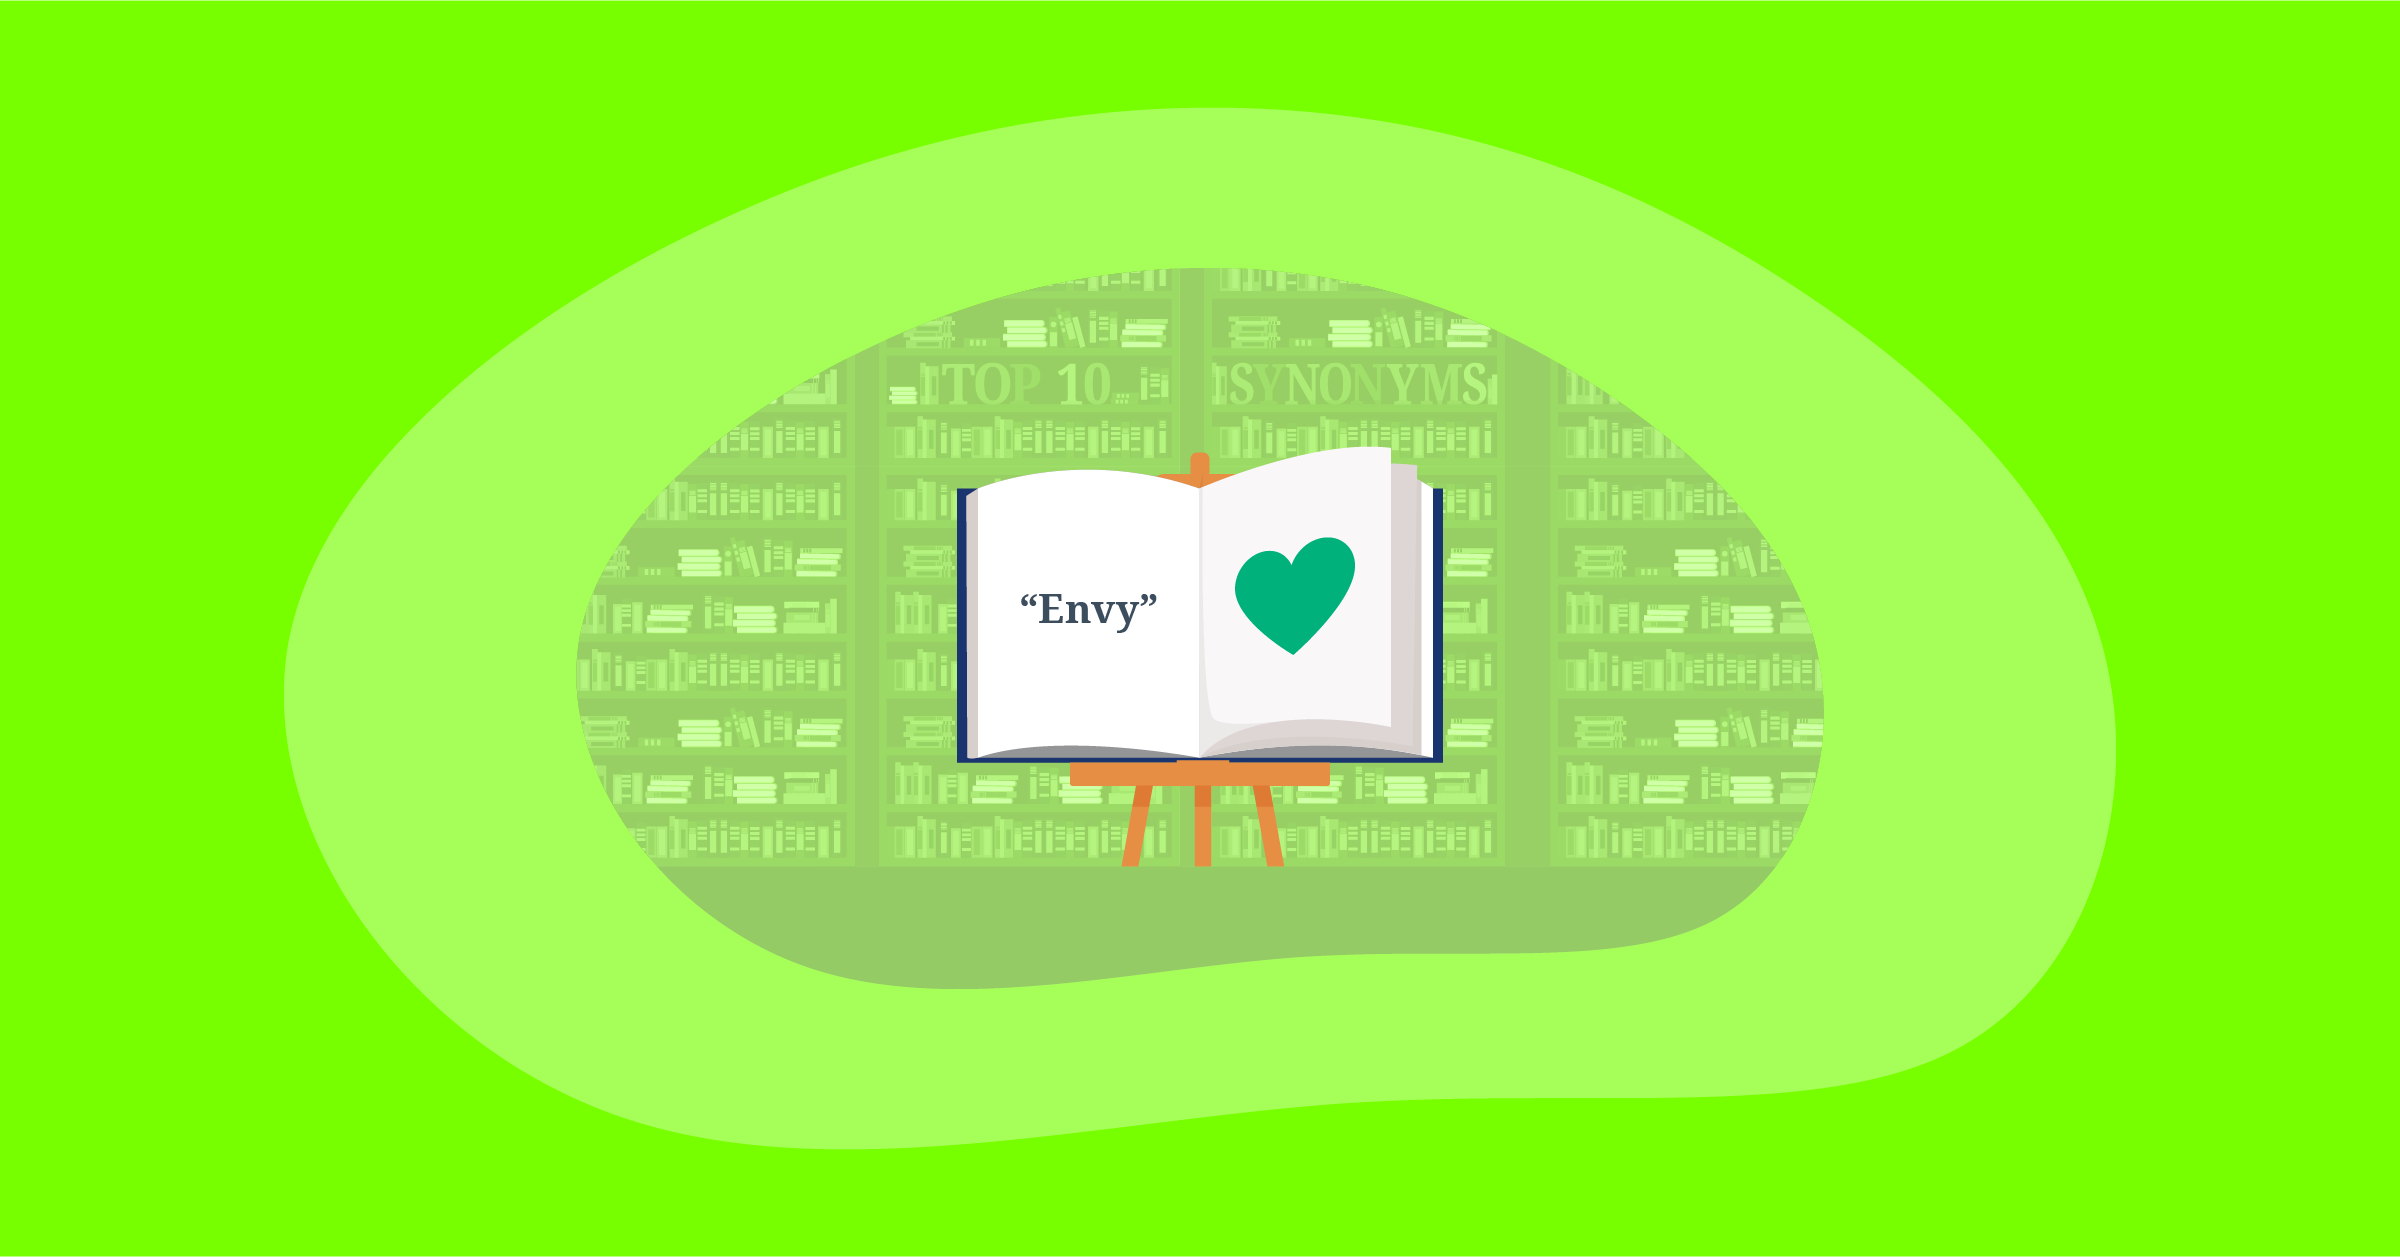 Illustration for top 10 positive impactful words for "Envy"